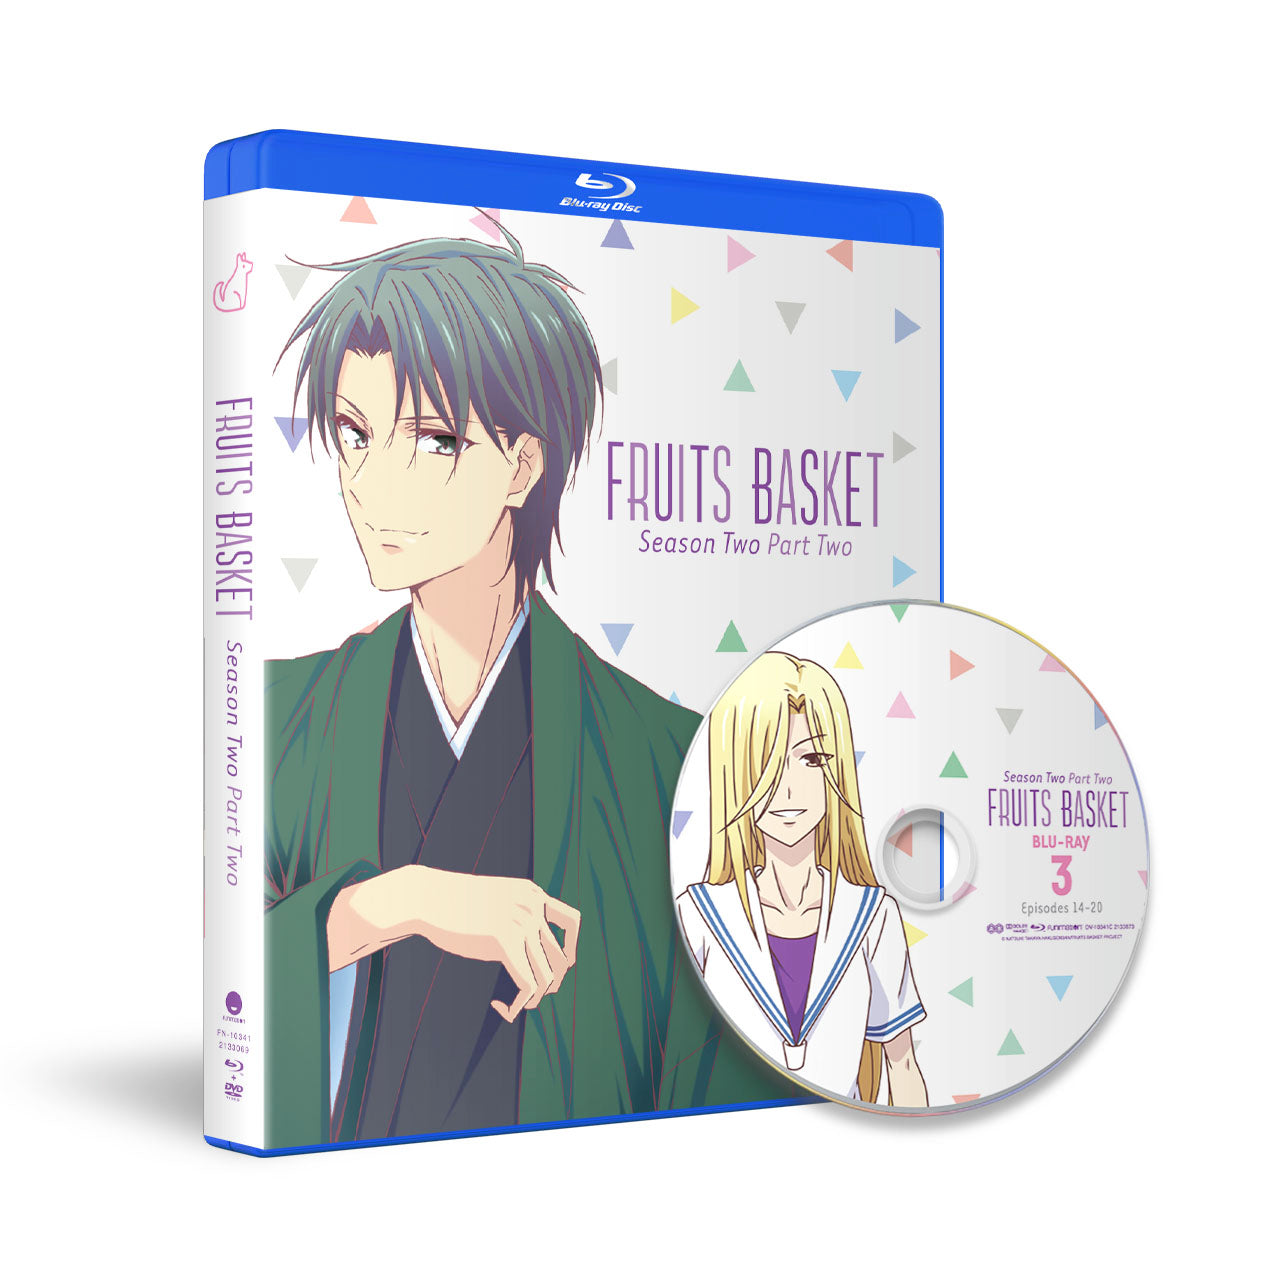 Fruits Basket (2019) - Season 2 Part 2 - Blu-ray + DVD image count 1